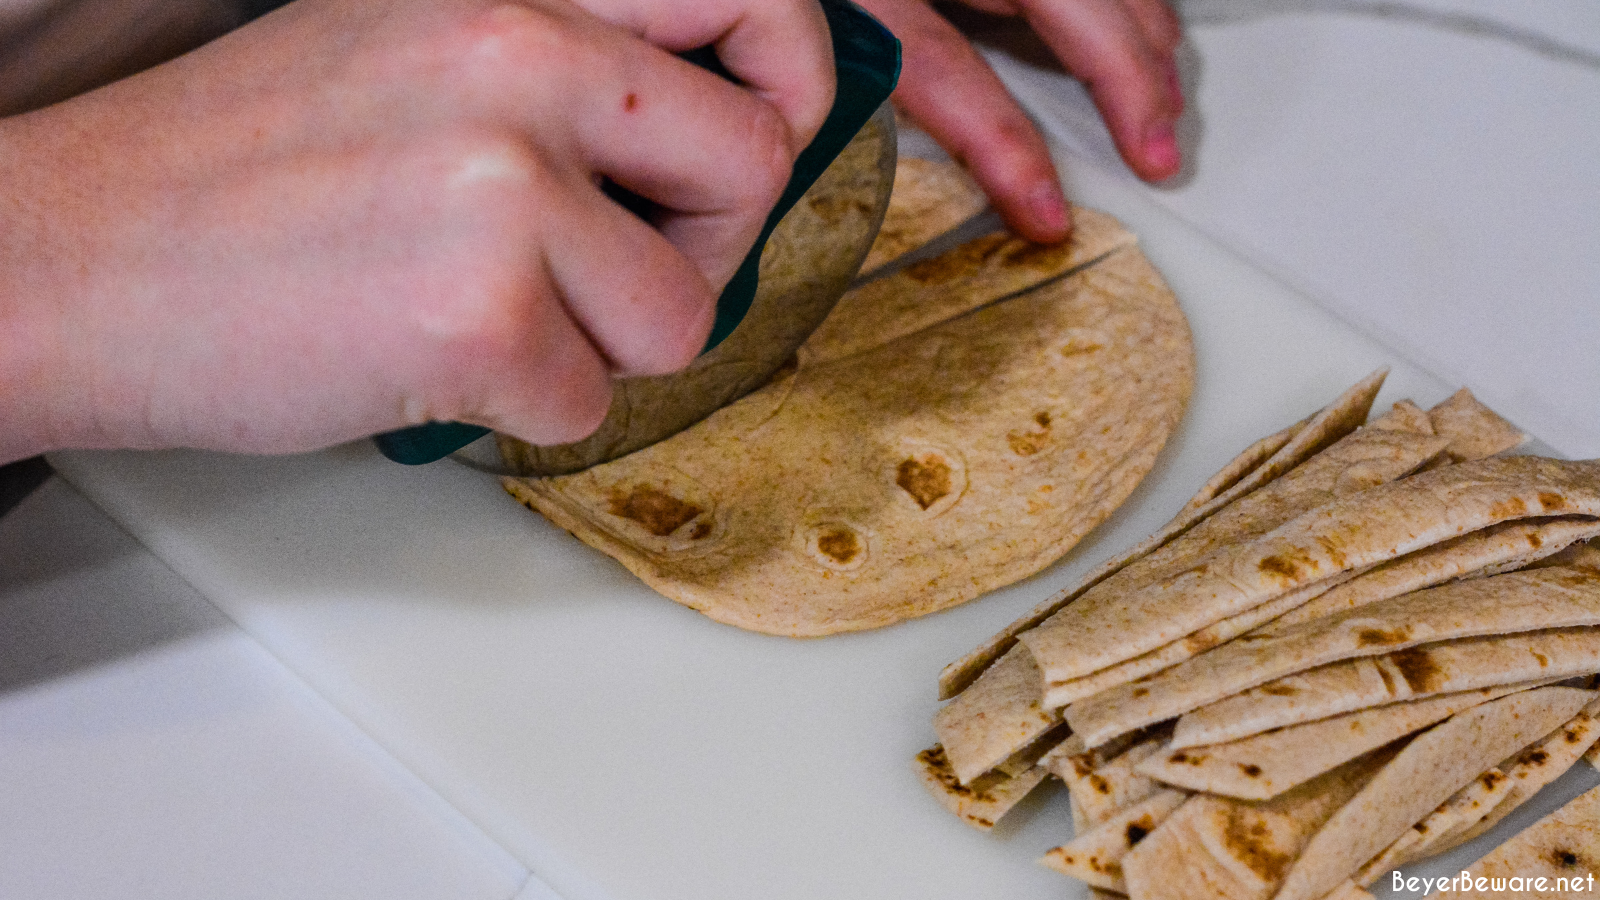 Cutting tortillas into strips